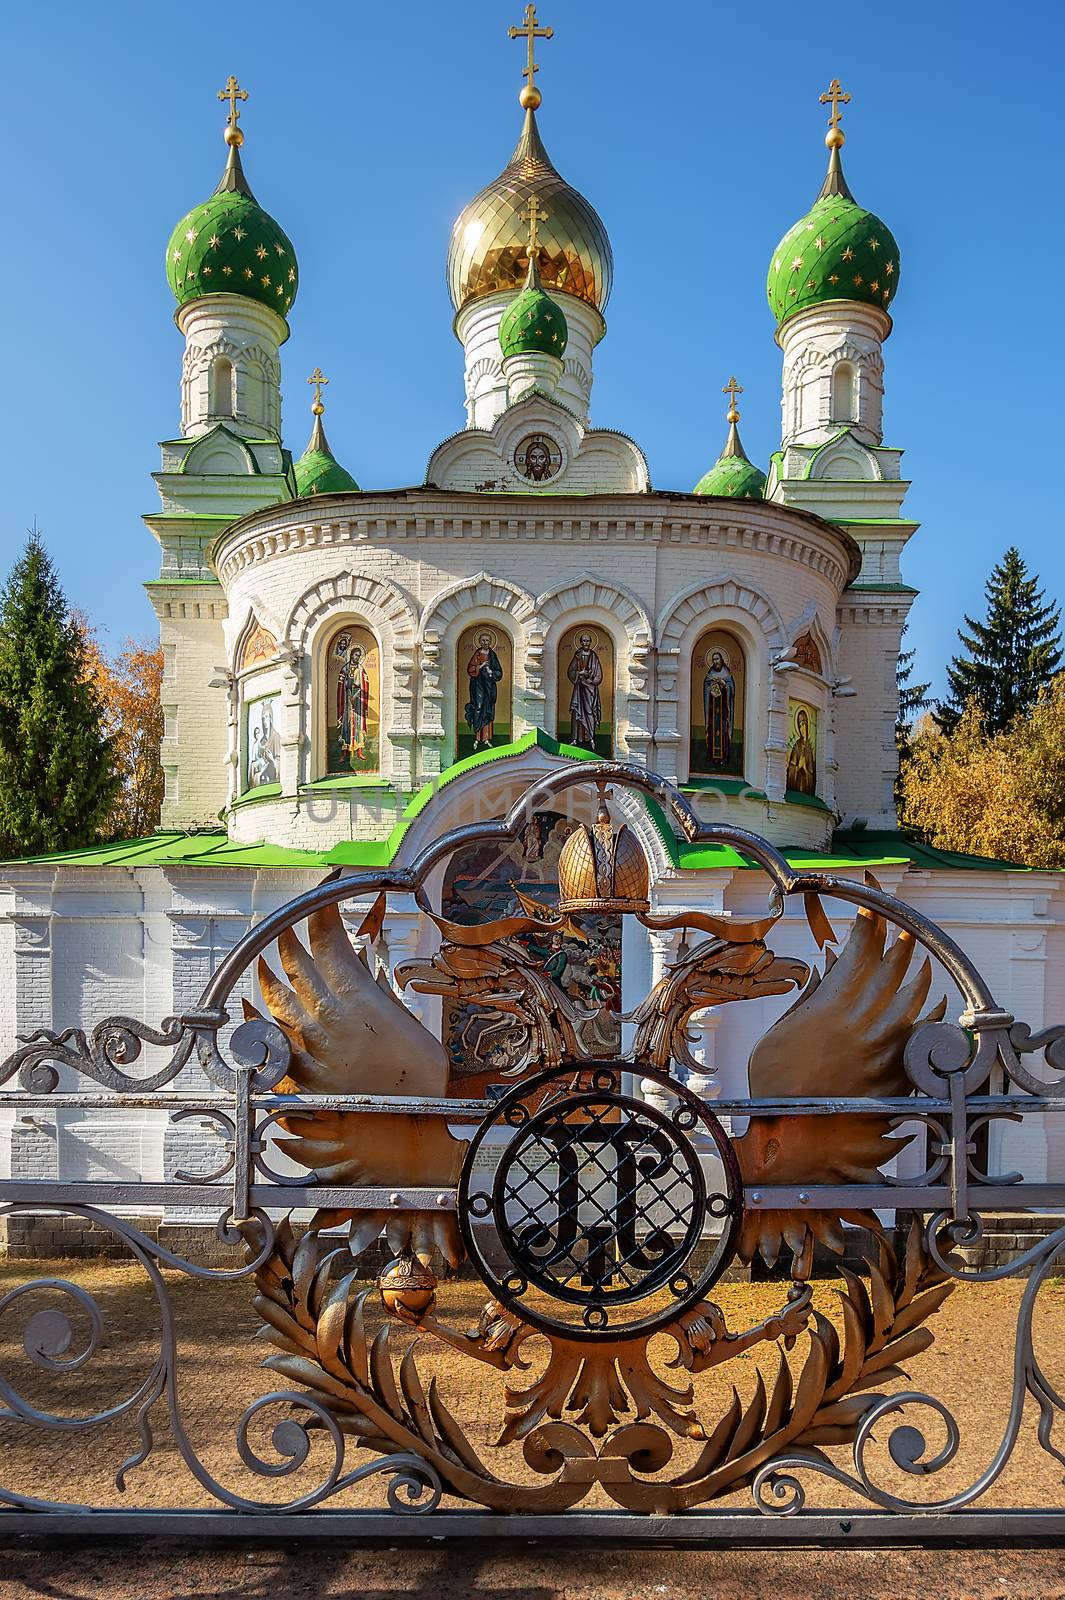 Orthodox church on the battlefield Battle of Poltava by Vladyslav